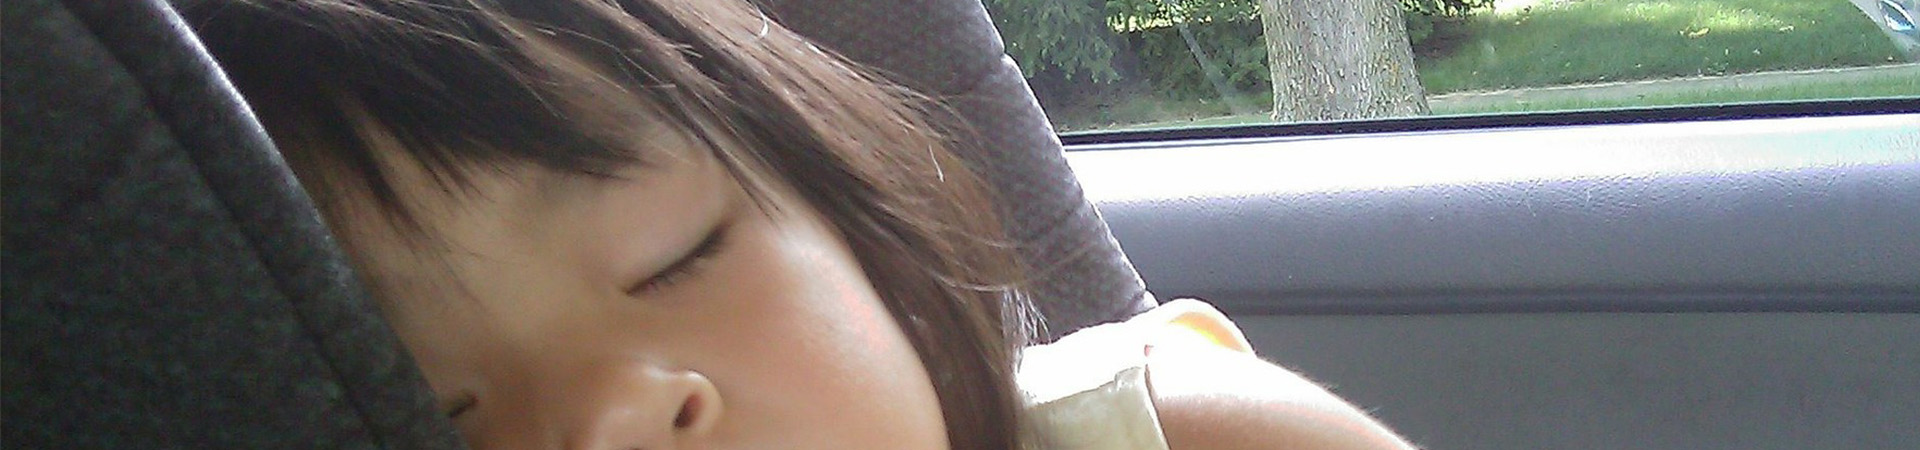 a girl asleep in a car seat